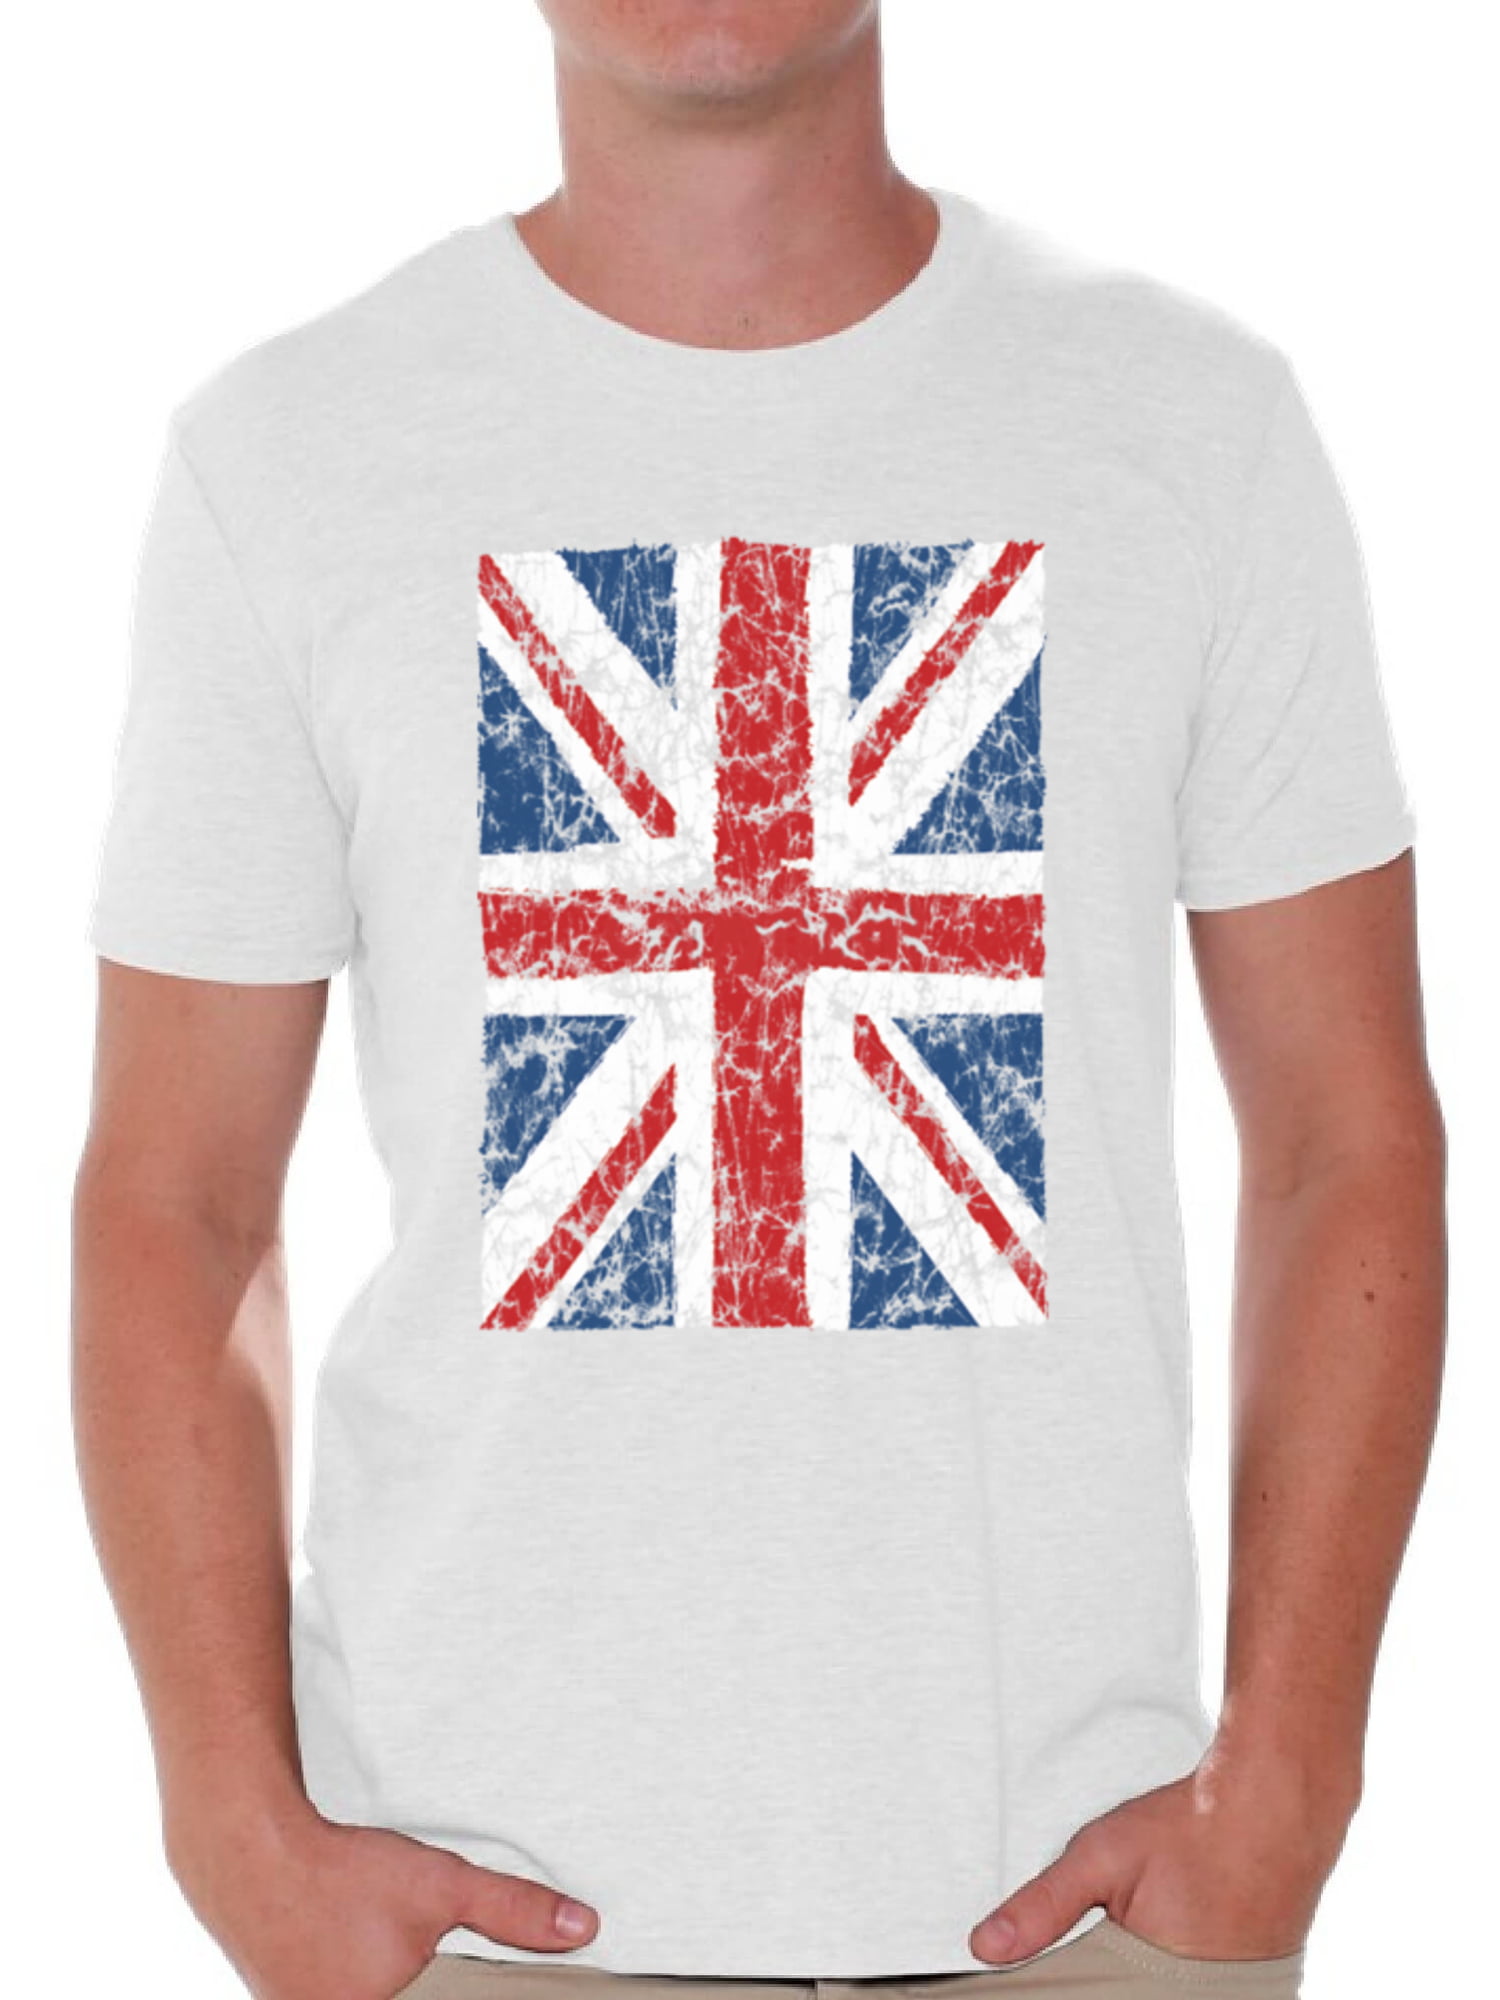 Awkward Styles - Union Jack Shirt British Flag Men's Tee Patriotic ...